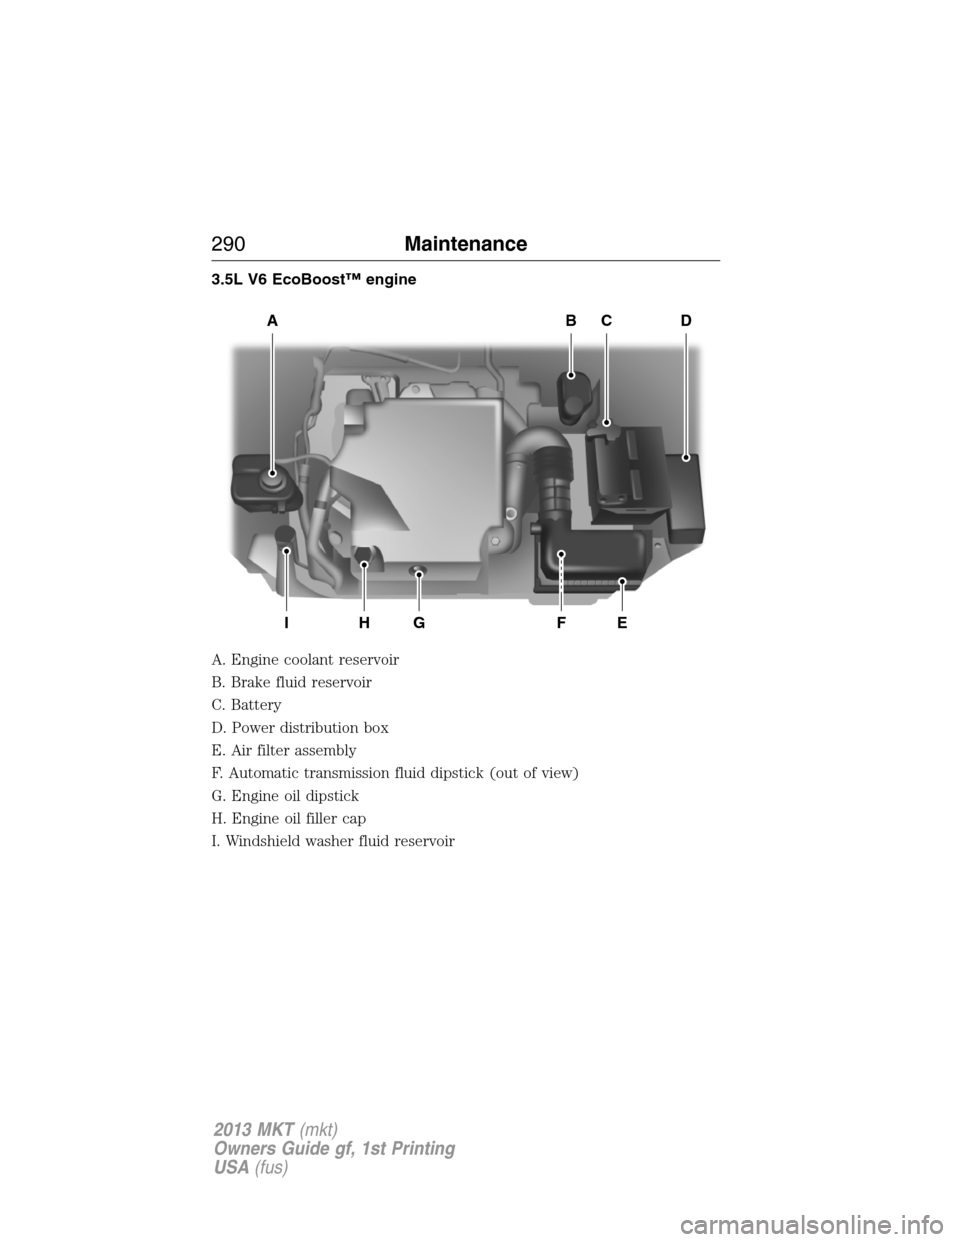 LINCOLN MKT 2013 Service Manual 3.5L V6 EcoBoost™ engine
A. Engine coolant reservoir
B. Brake fluid reservoir
C. Battery
D. Power distribution box
E. Air filter assembly
F. Automatic transmission fluid dipstick (out of view)
G. En